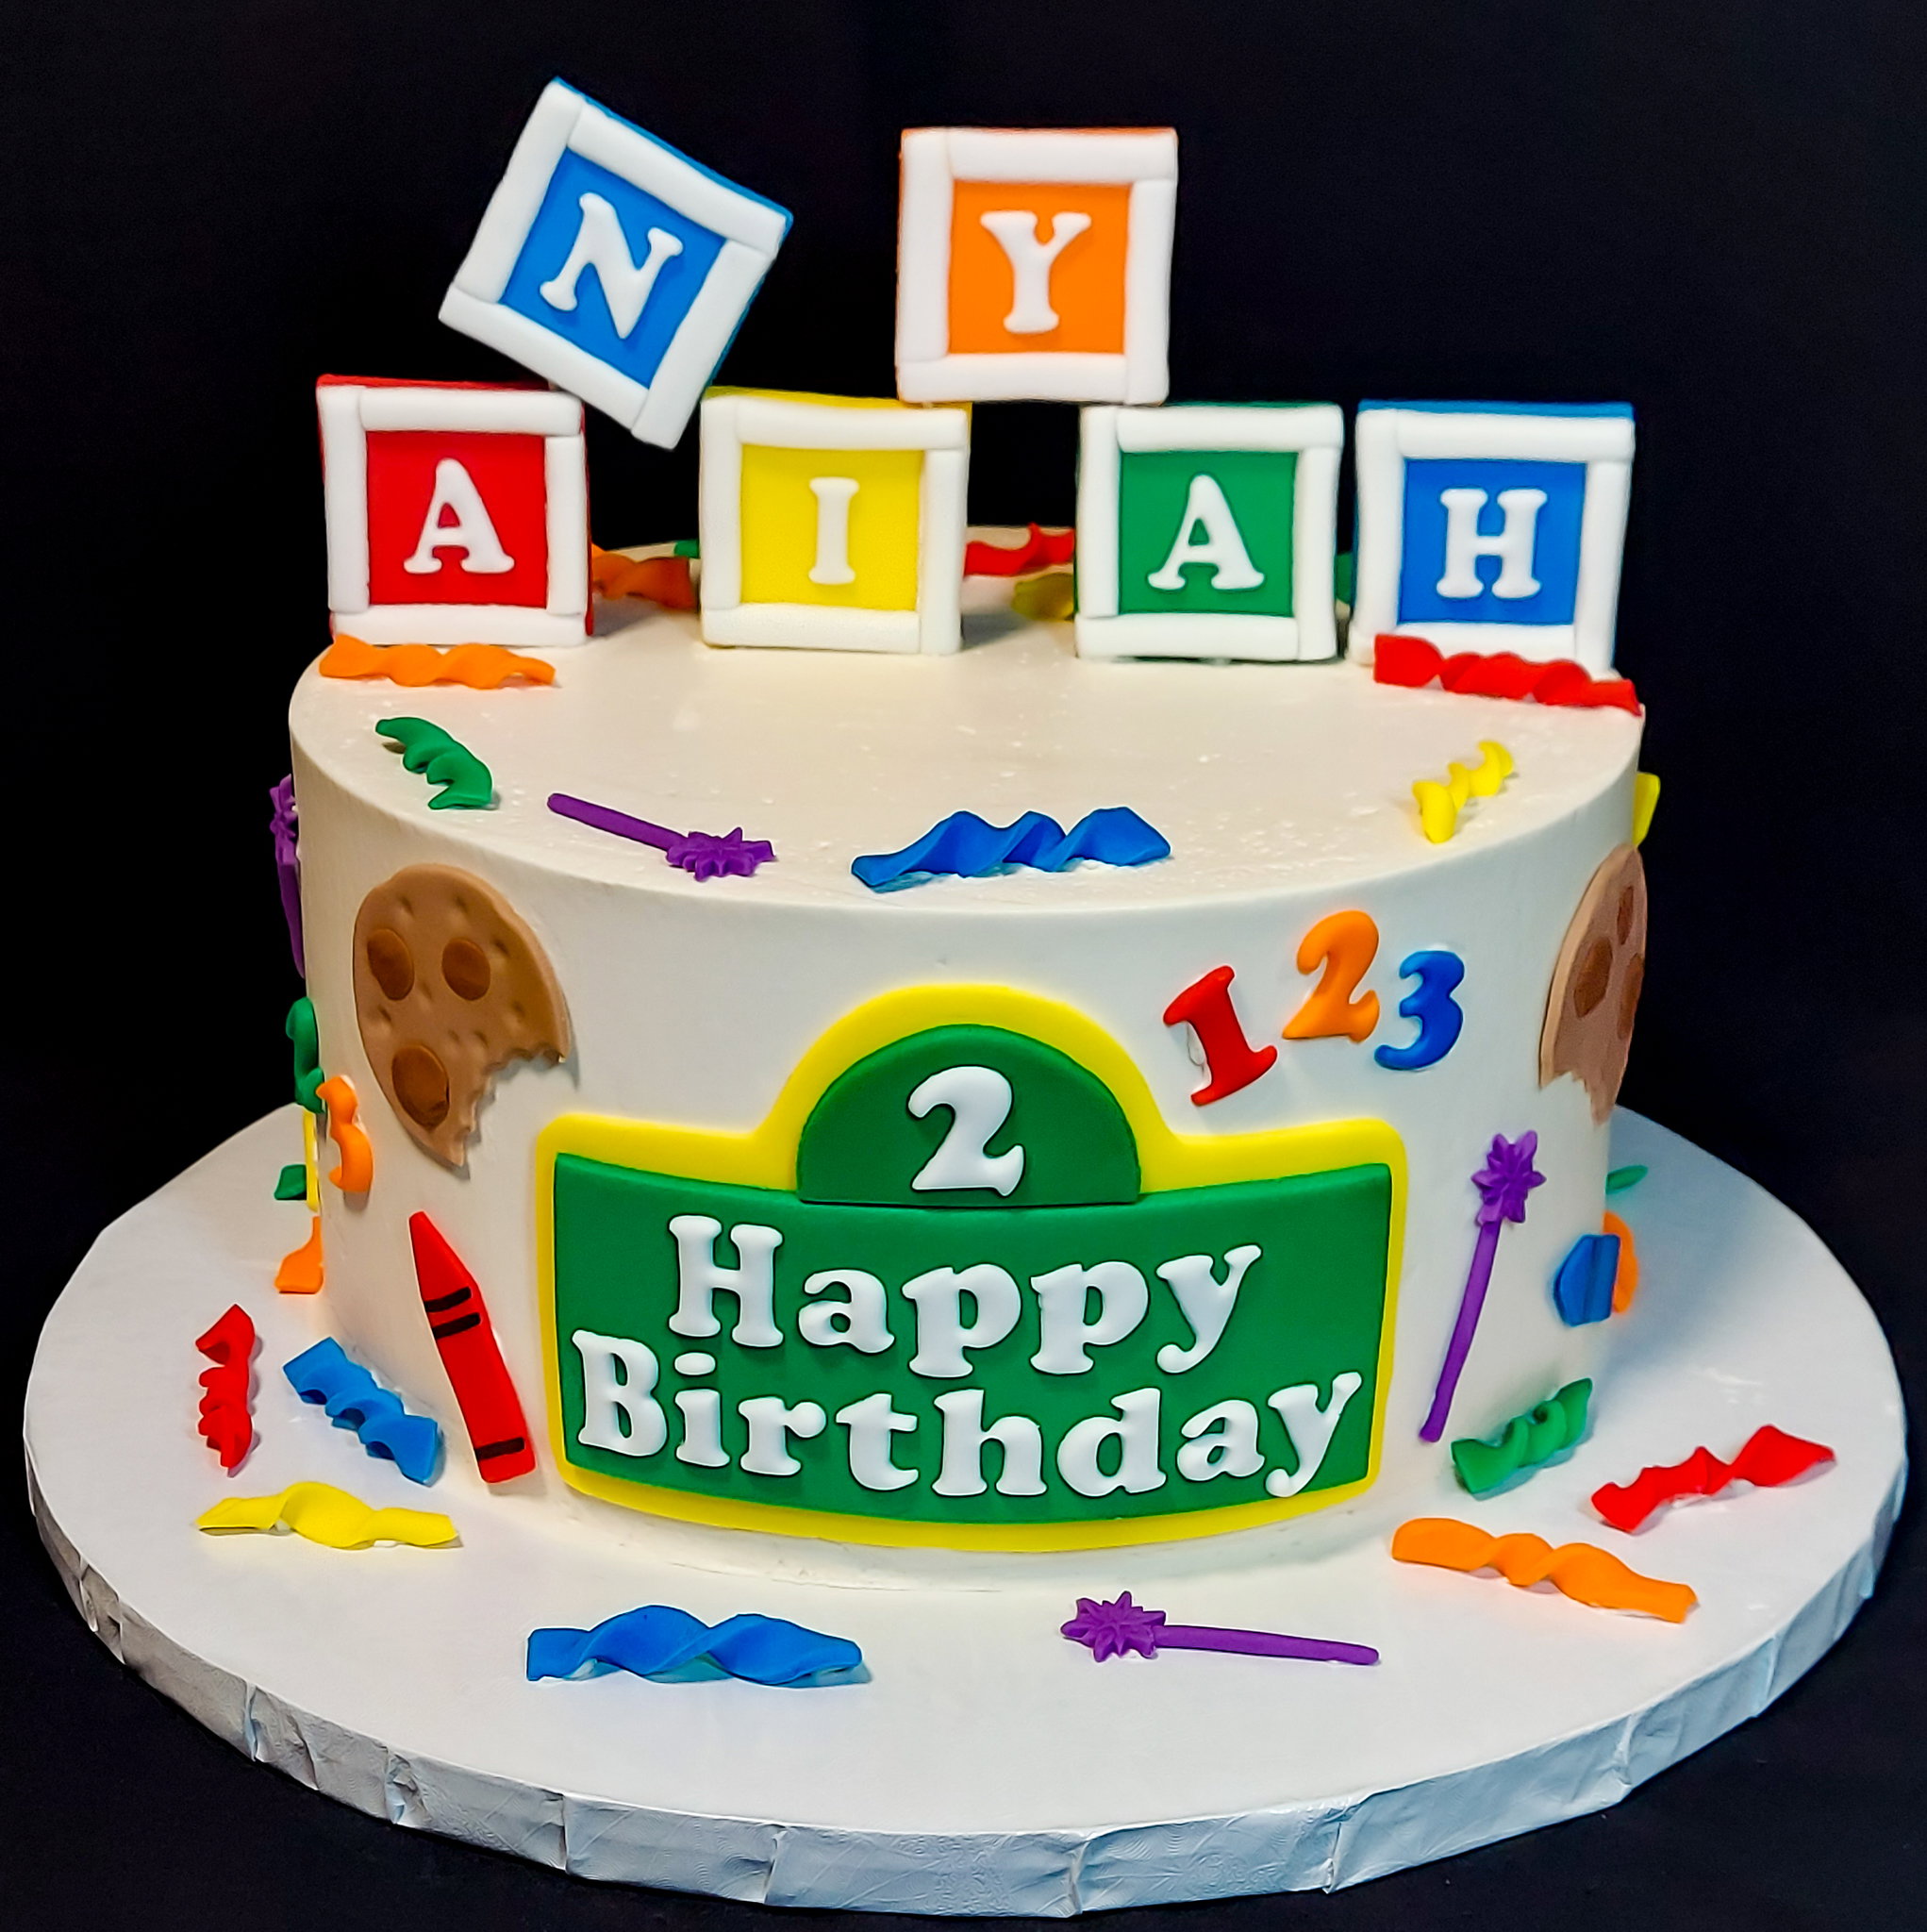 Abc cake! . . #abccake #fondantcakes #disneycakes #birthdaycakes | Instagram